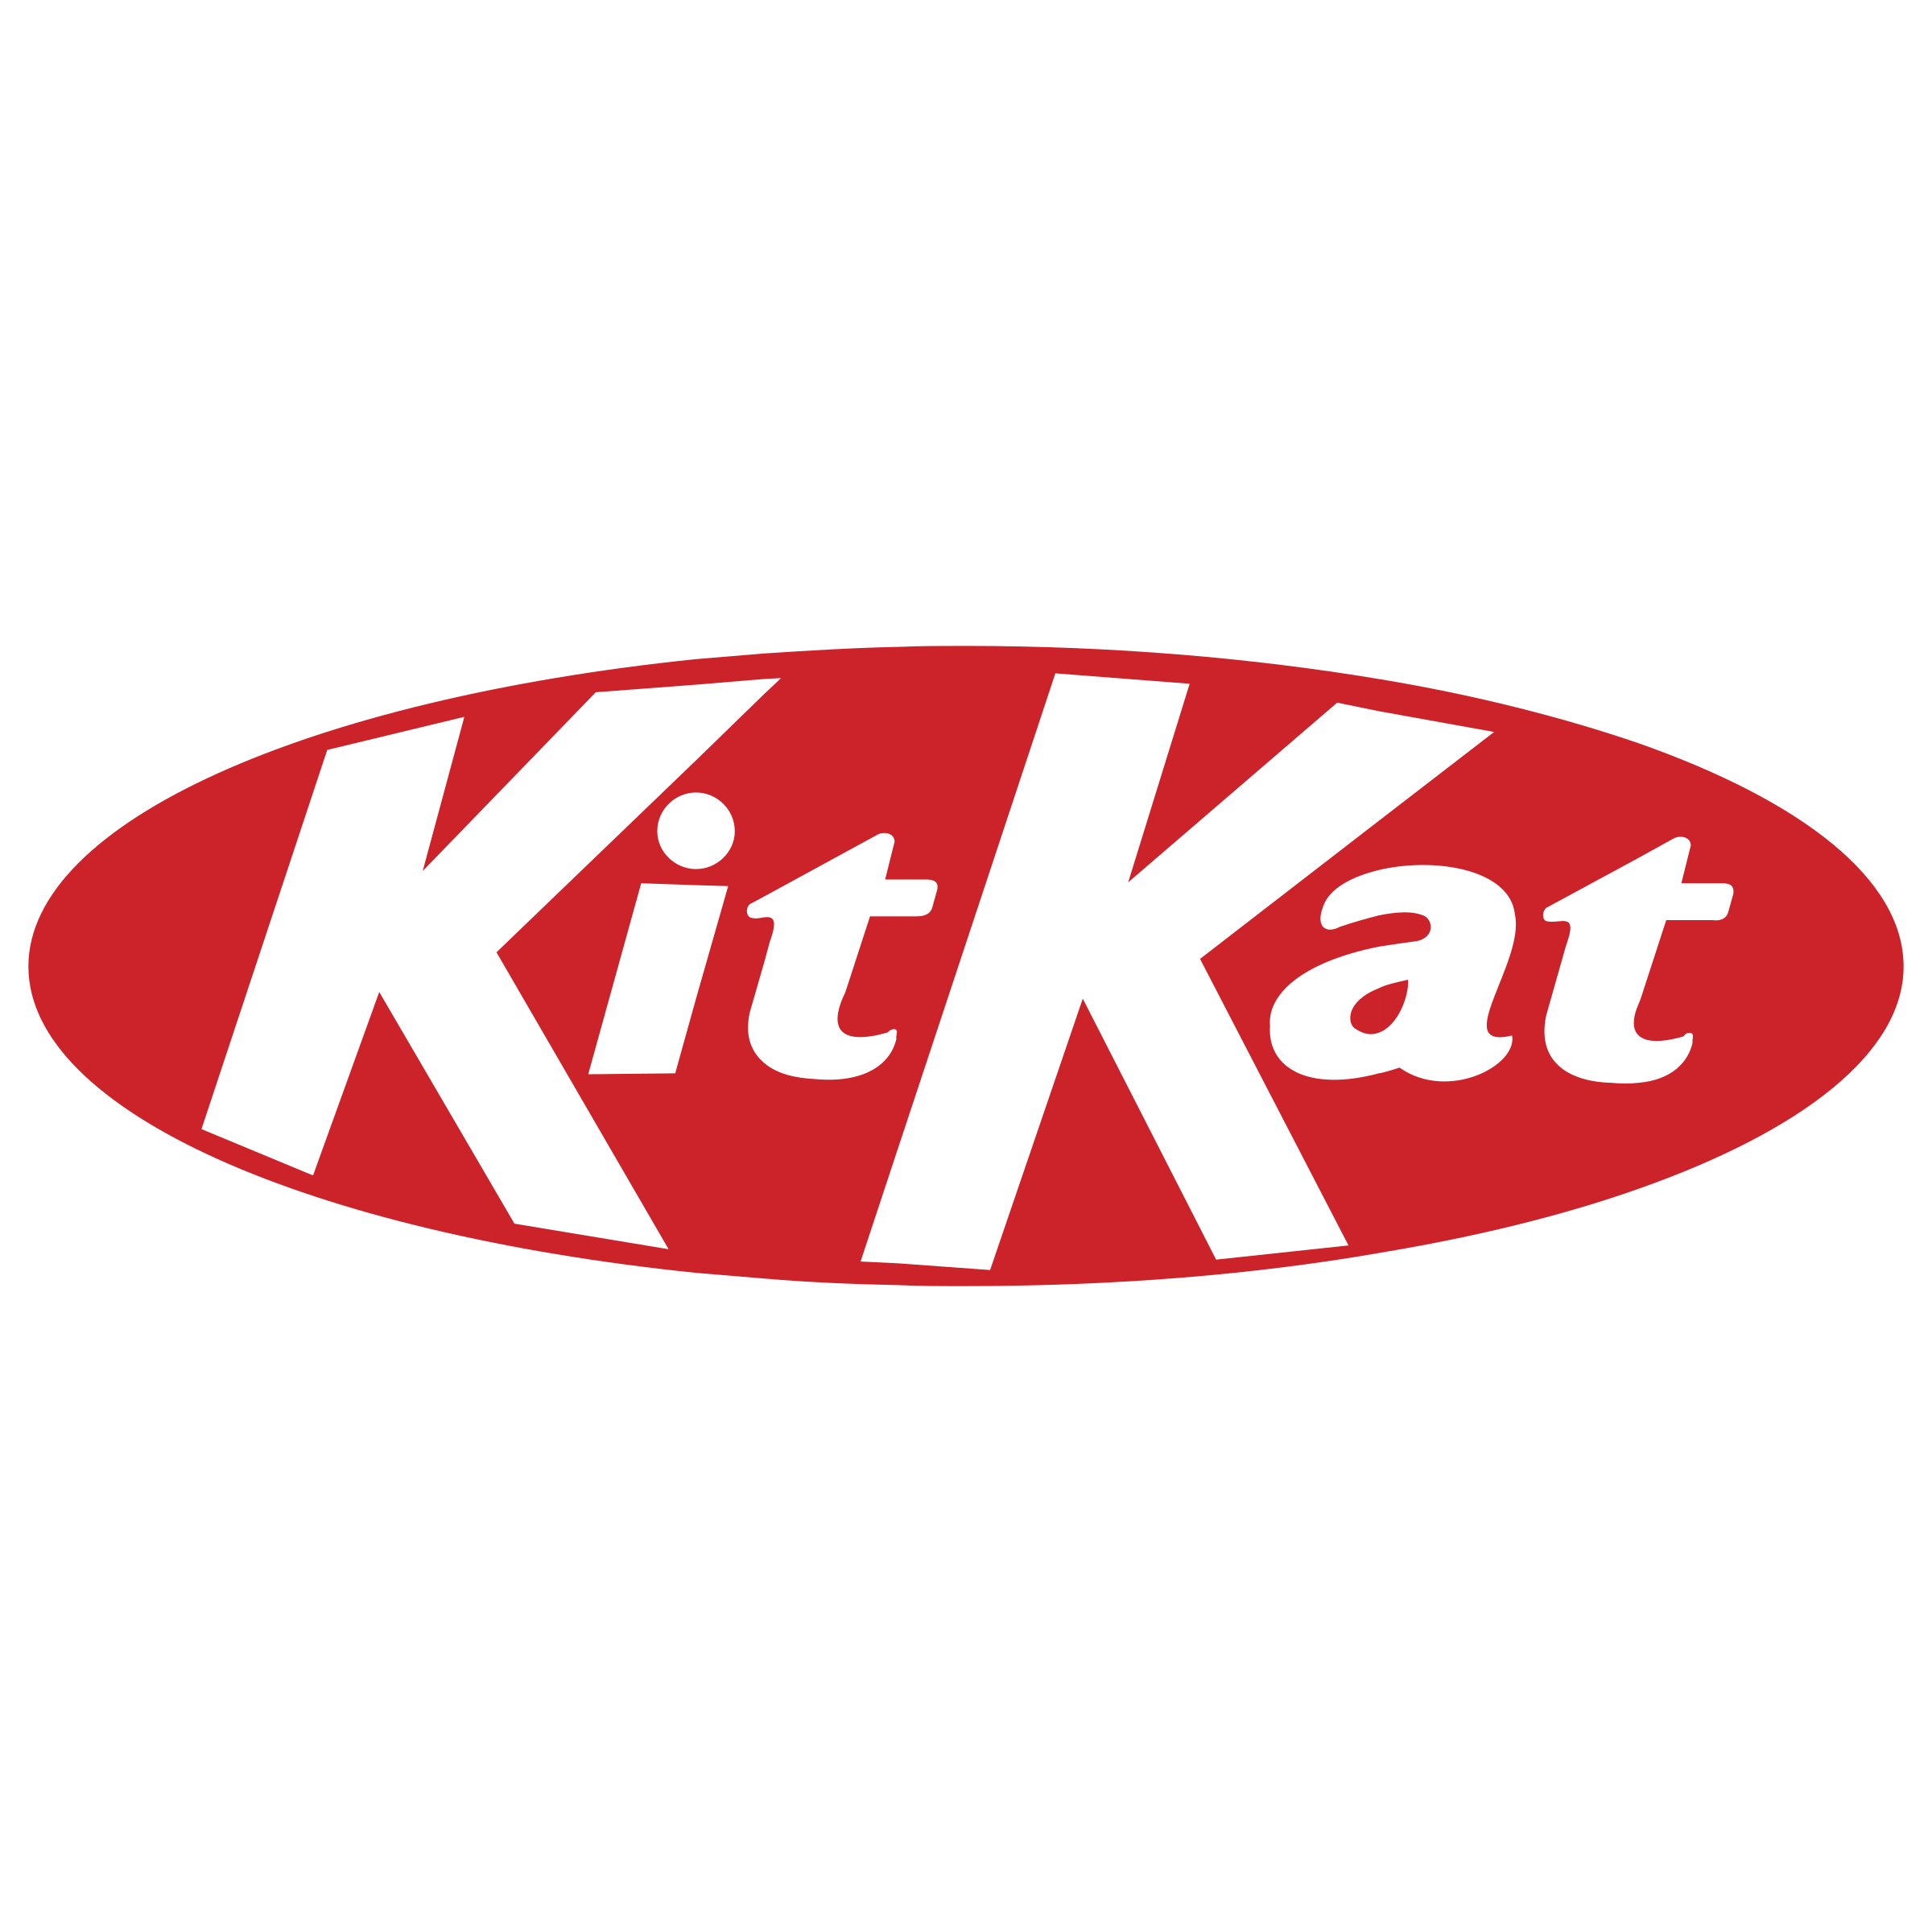 Kit Kat Logo - Kitkat Logo PNG Transparent & SVG Vector